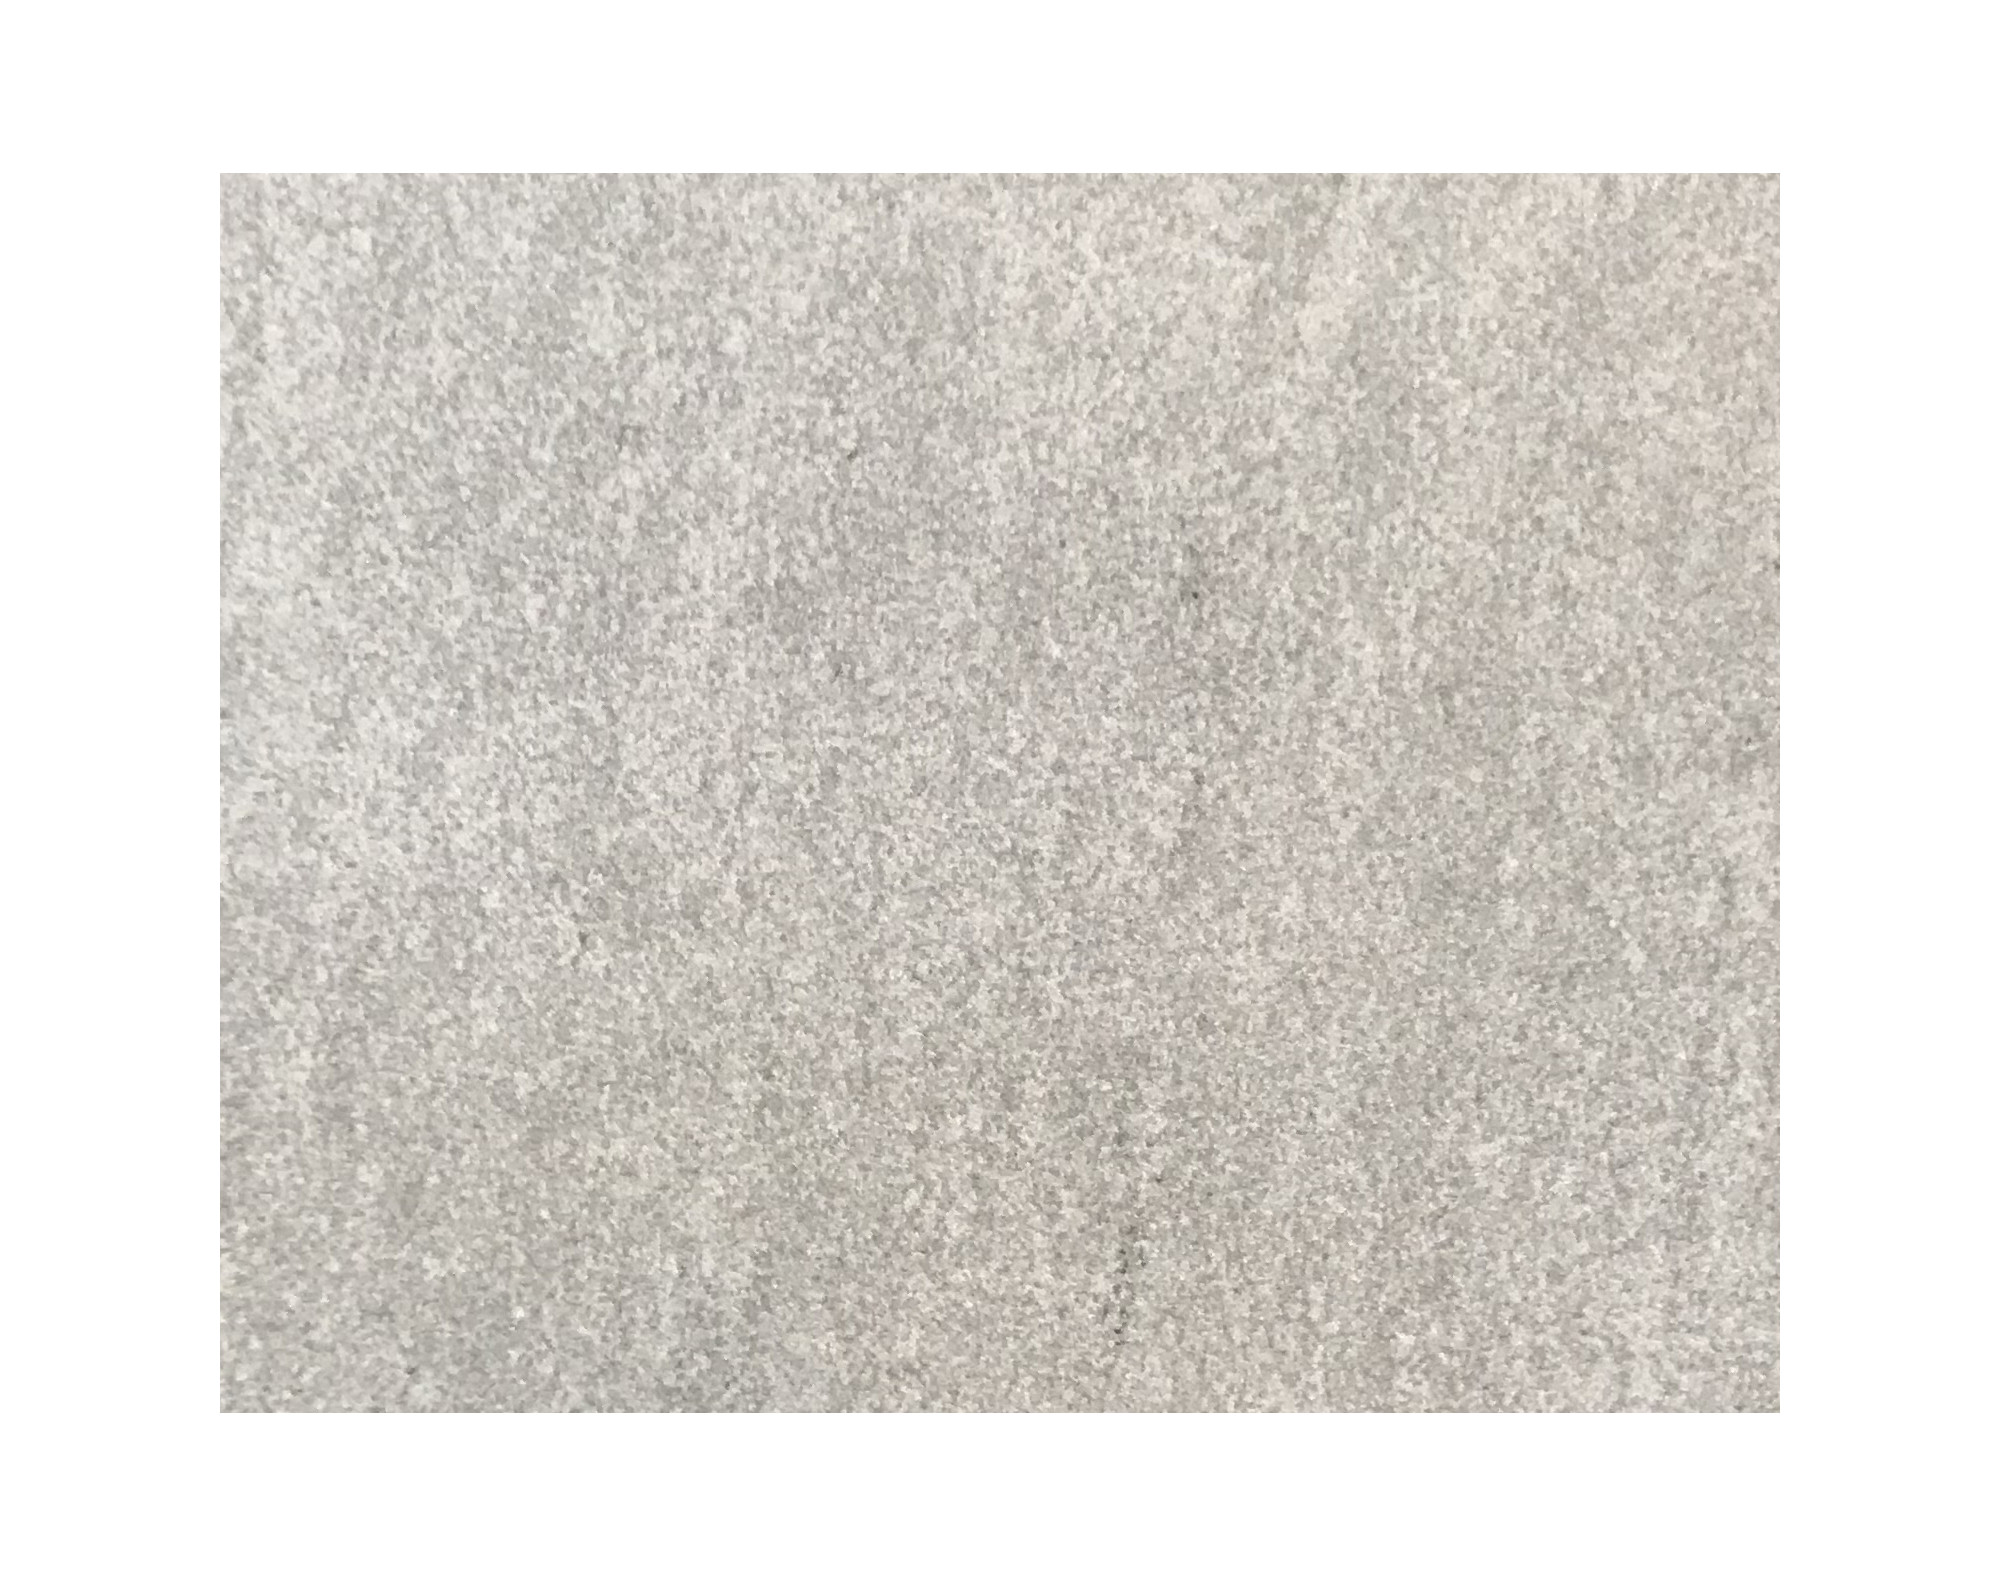 Harmo roc maranelloset, keramiek-serie, rond d:4,20m, zand grijs, keramisch porselein